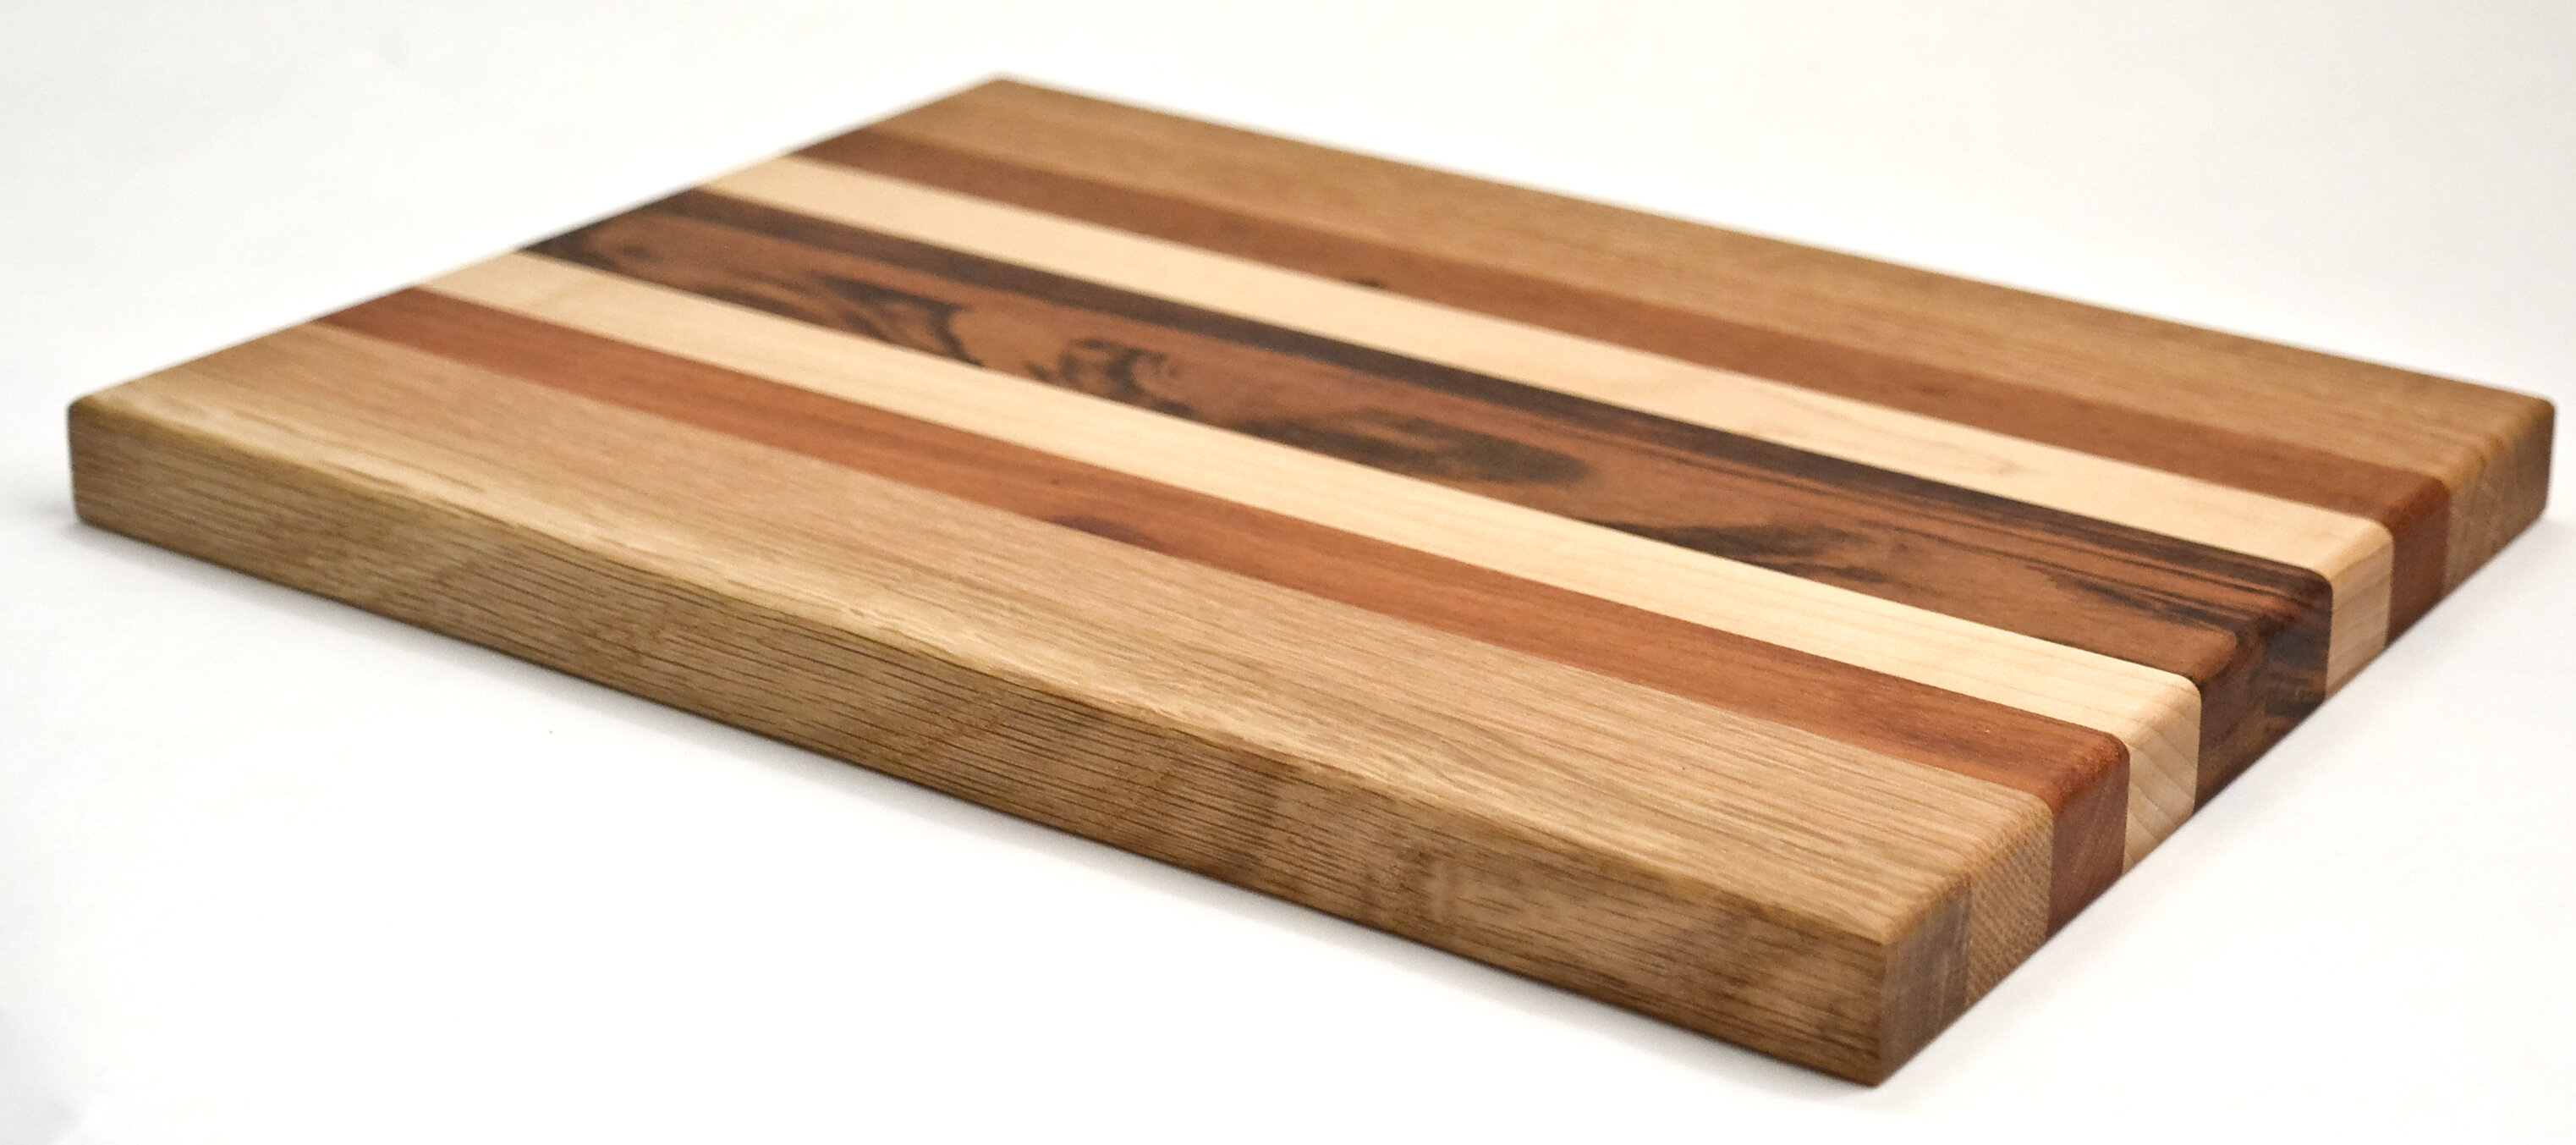 Coastal Carolina Cutting Boards Wood Cutting Board 